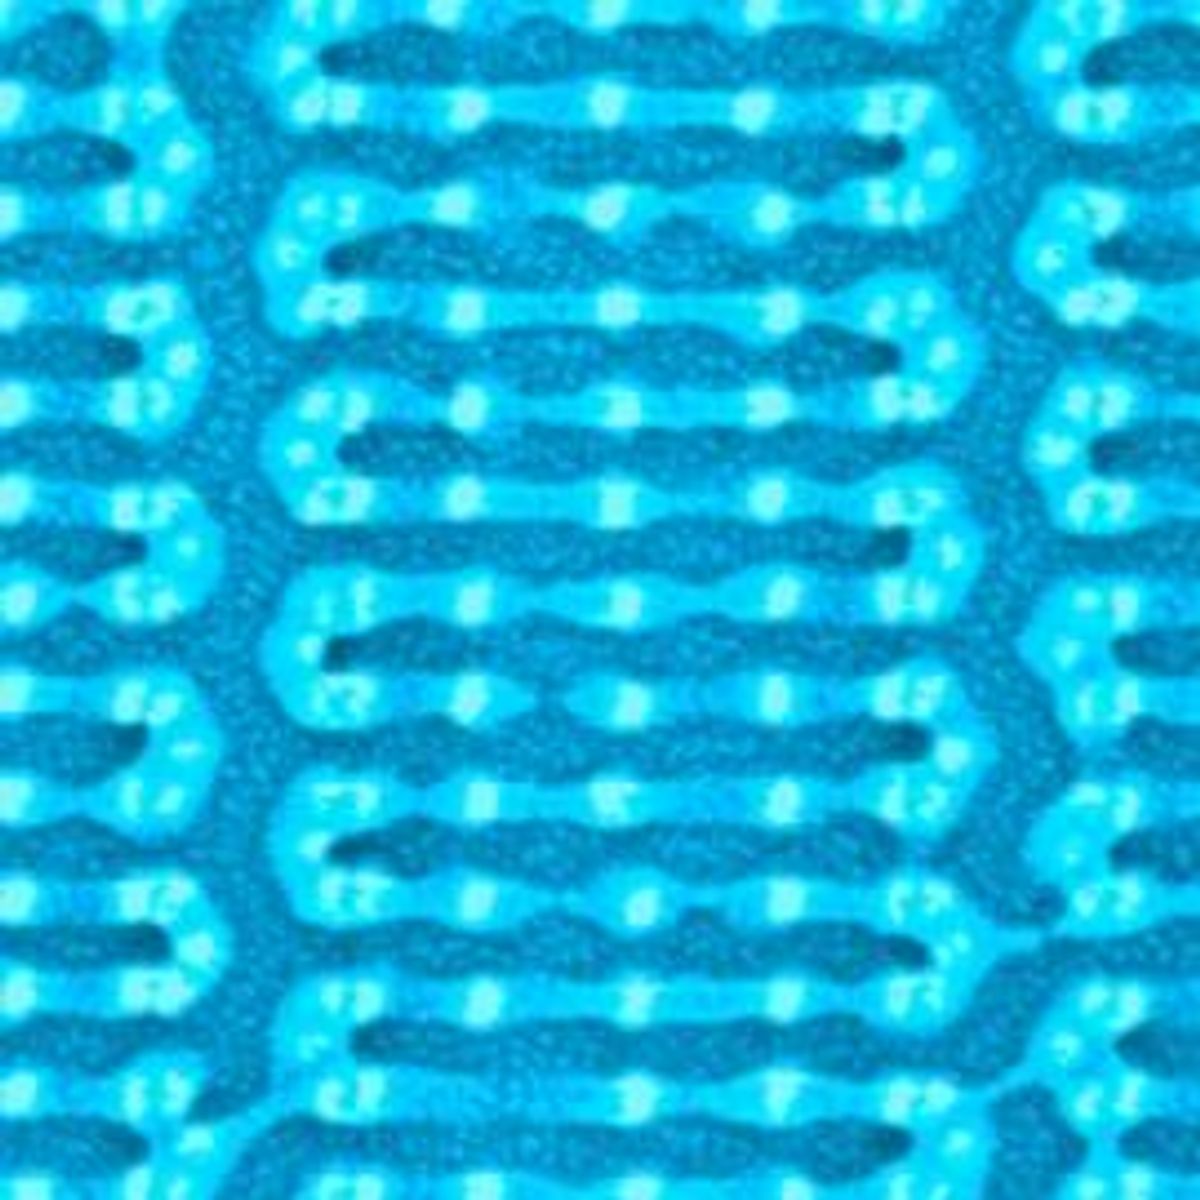 Nanotechnology Breakthrough in Photoresist Self-Assembly Redux